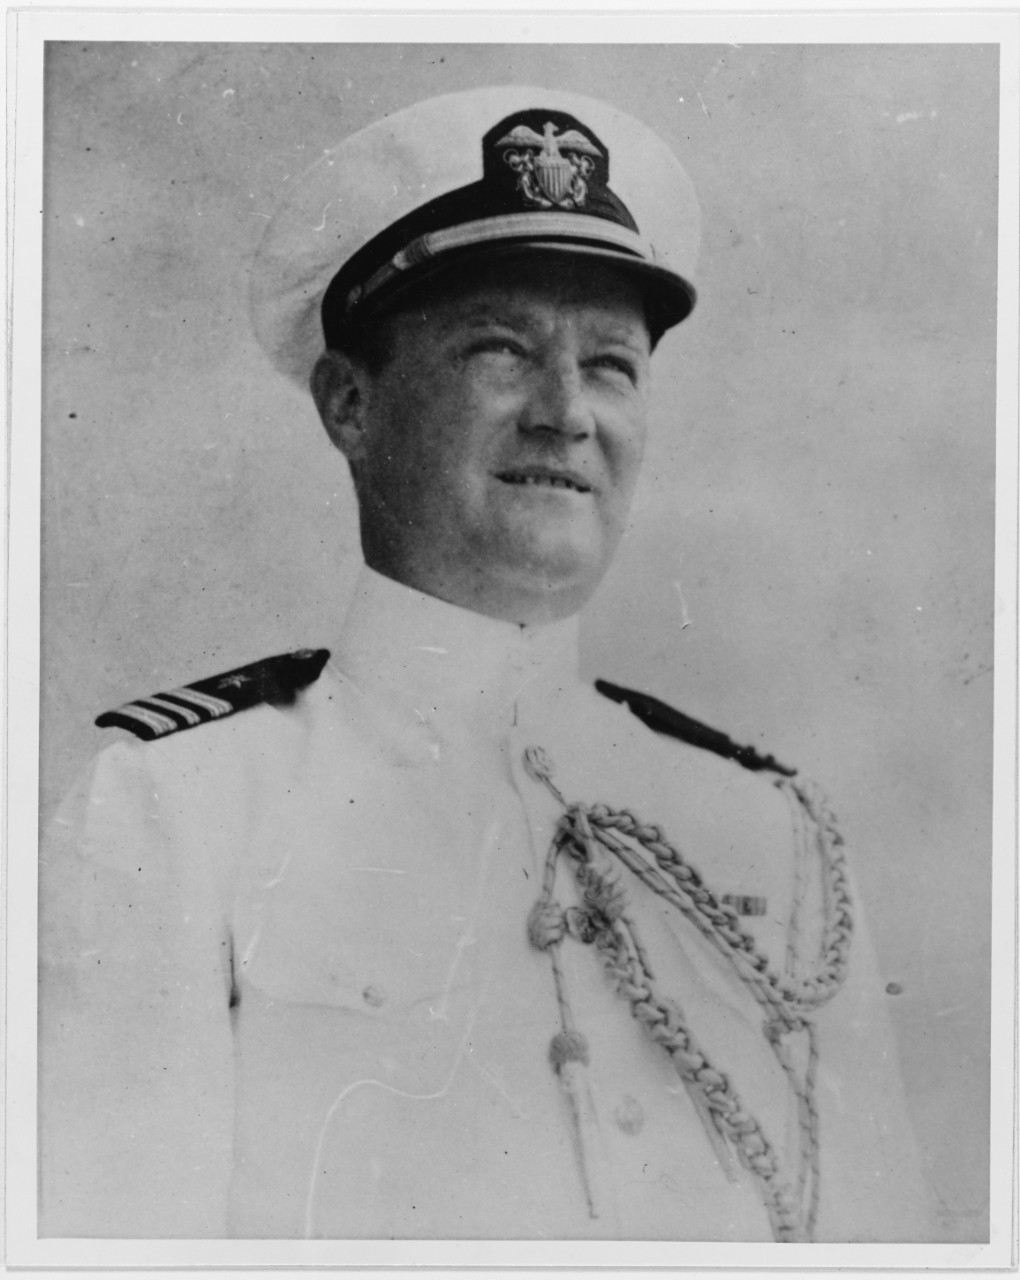 Lieutenant Commander Charles G. Moore, Jr., USN